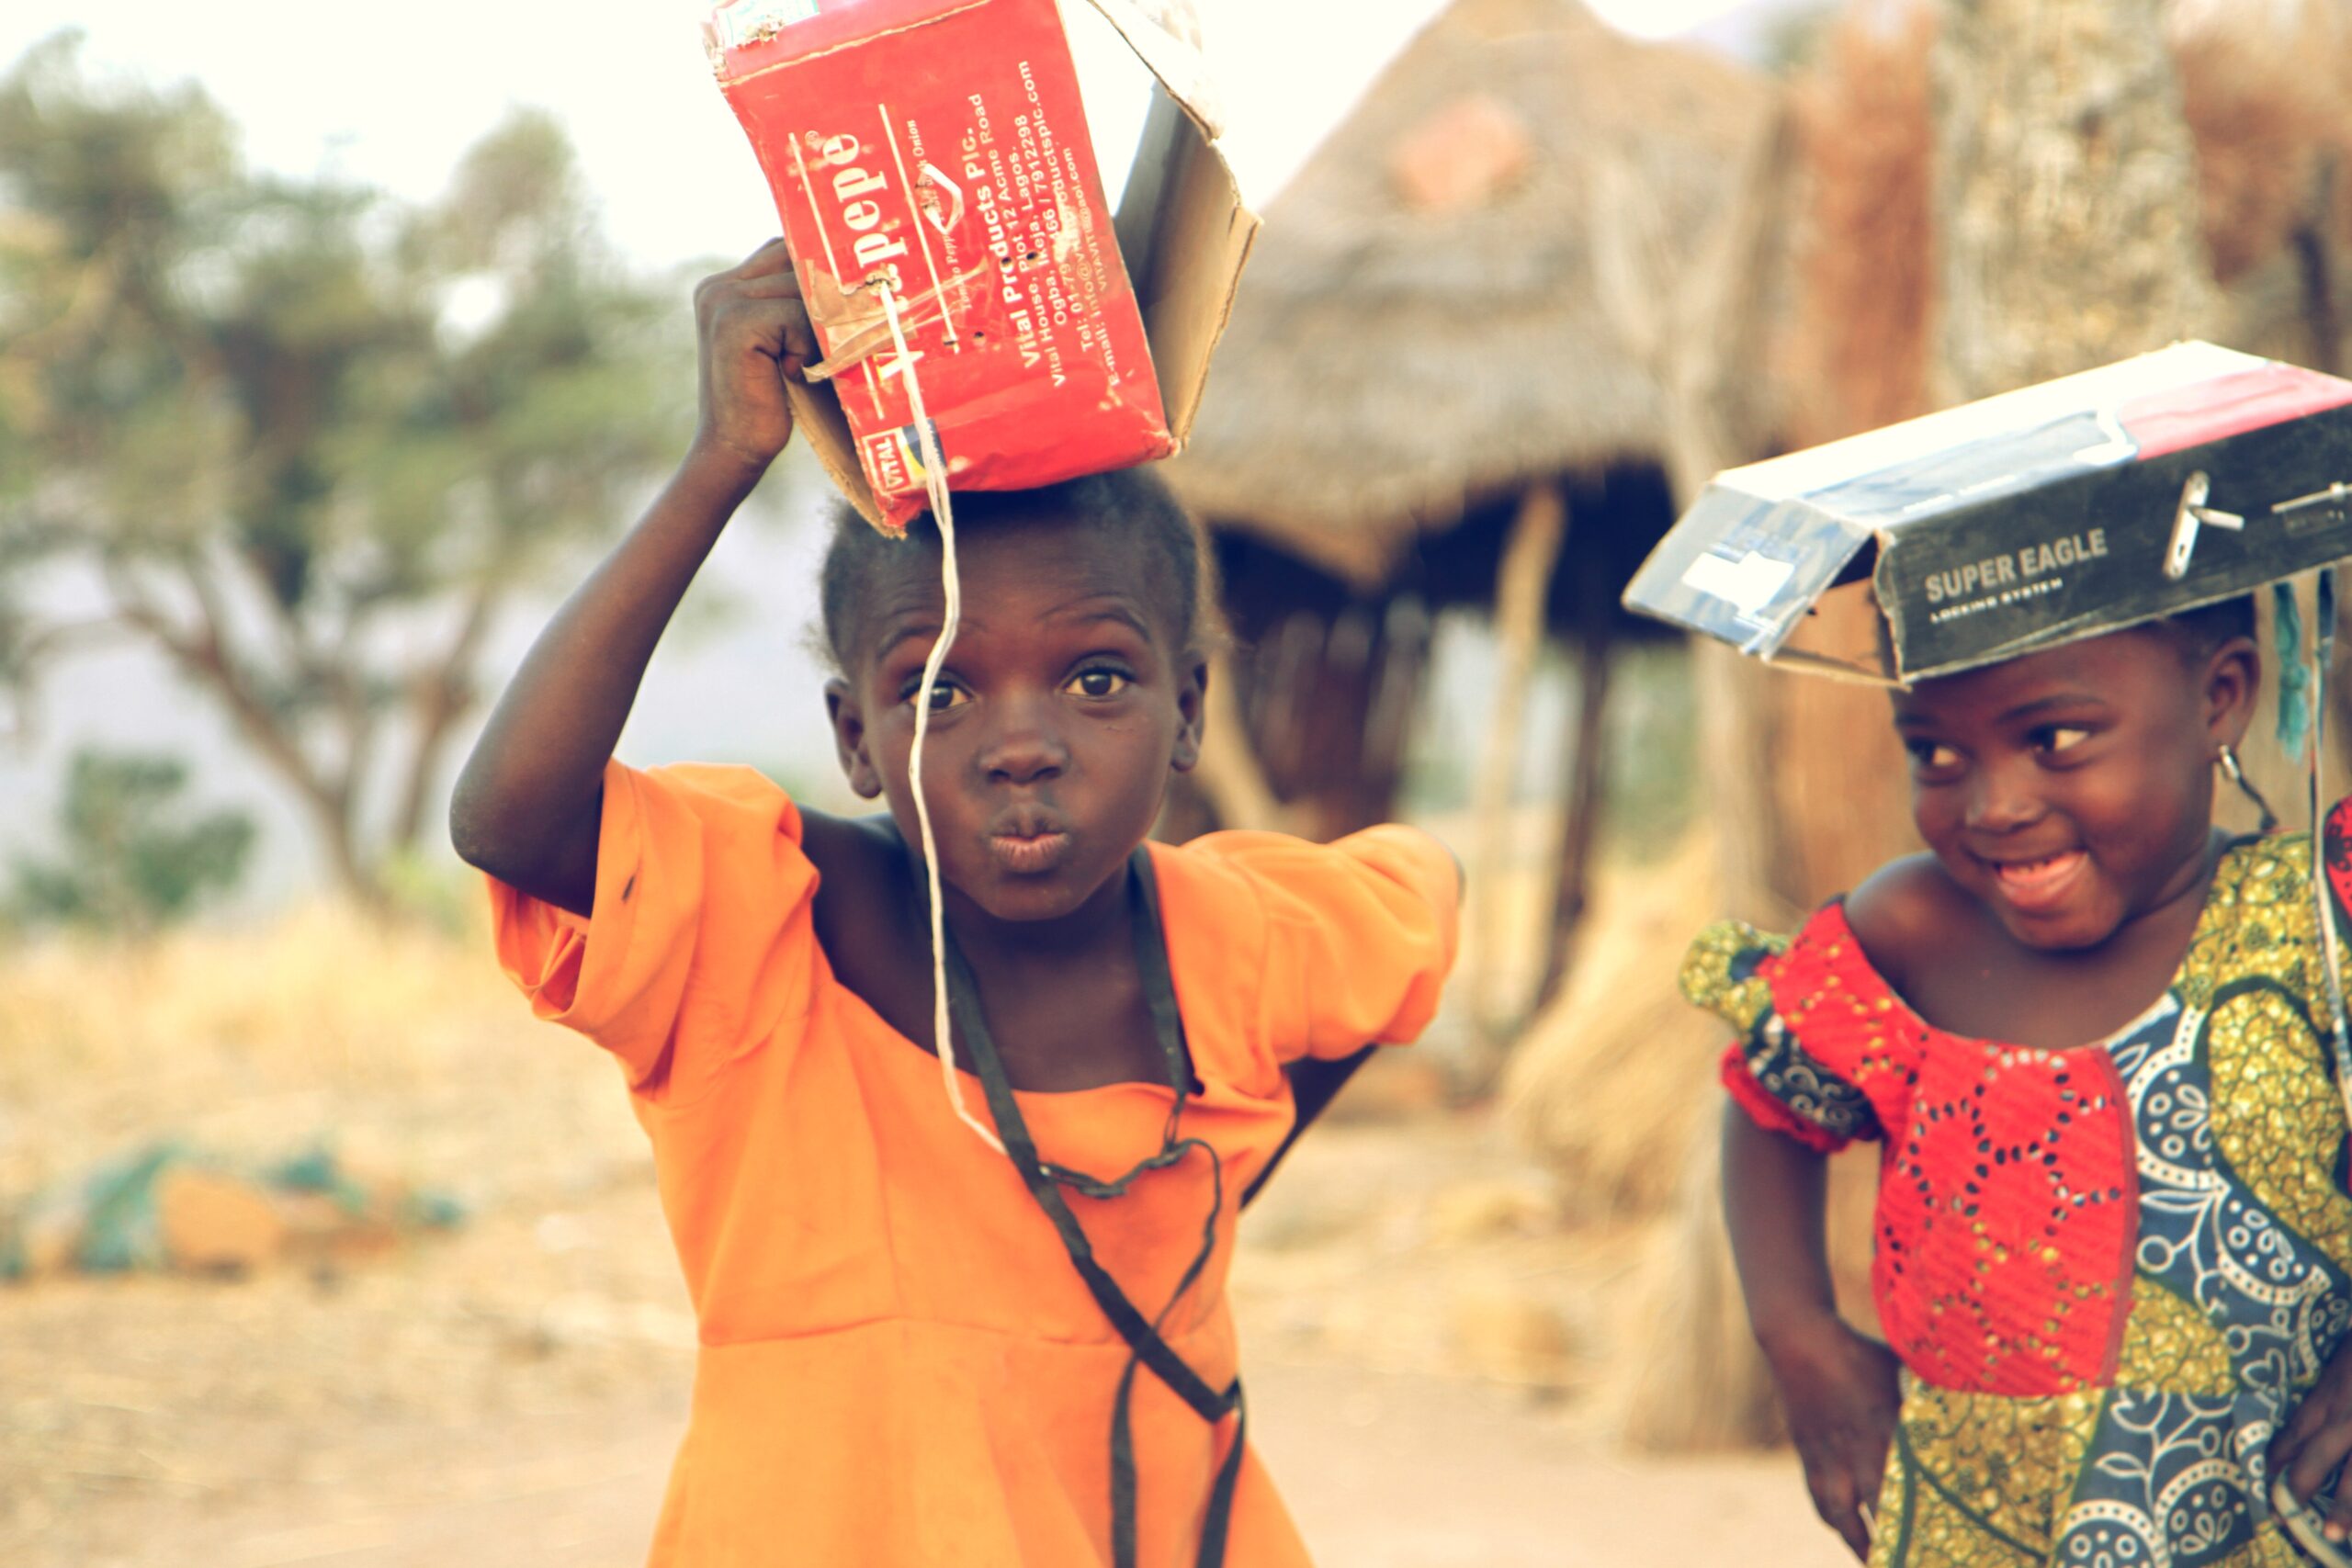 Sorrisi di bambini strade africane